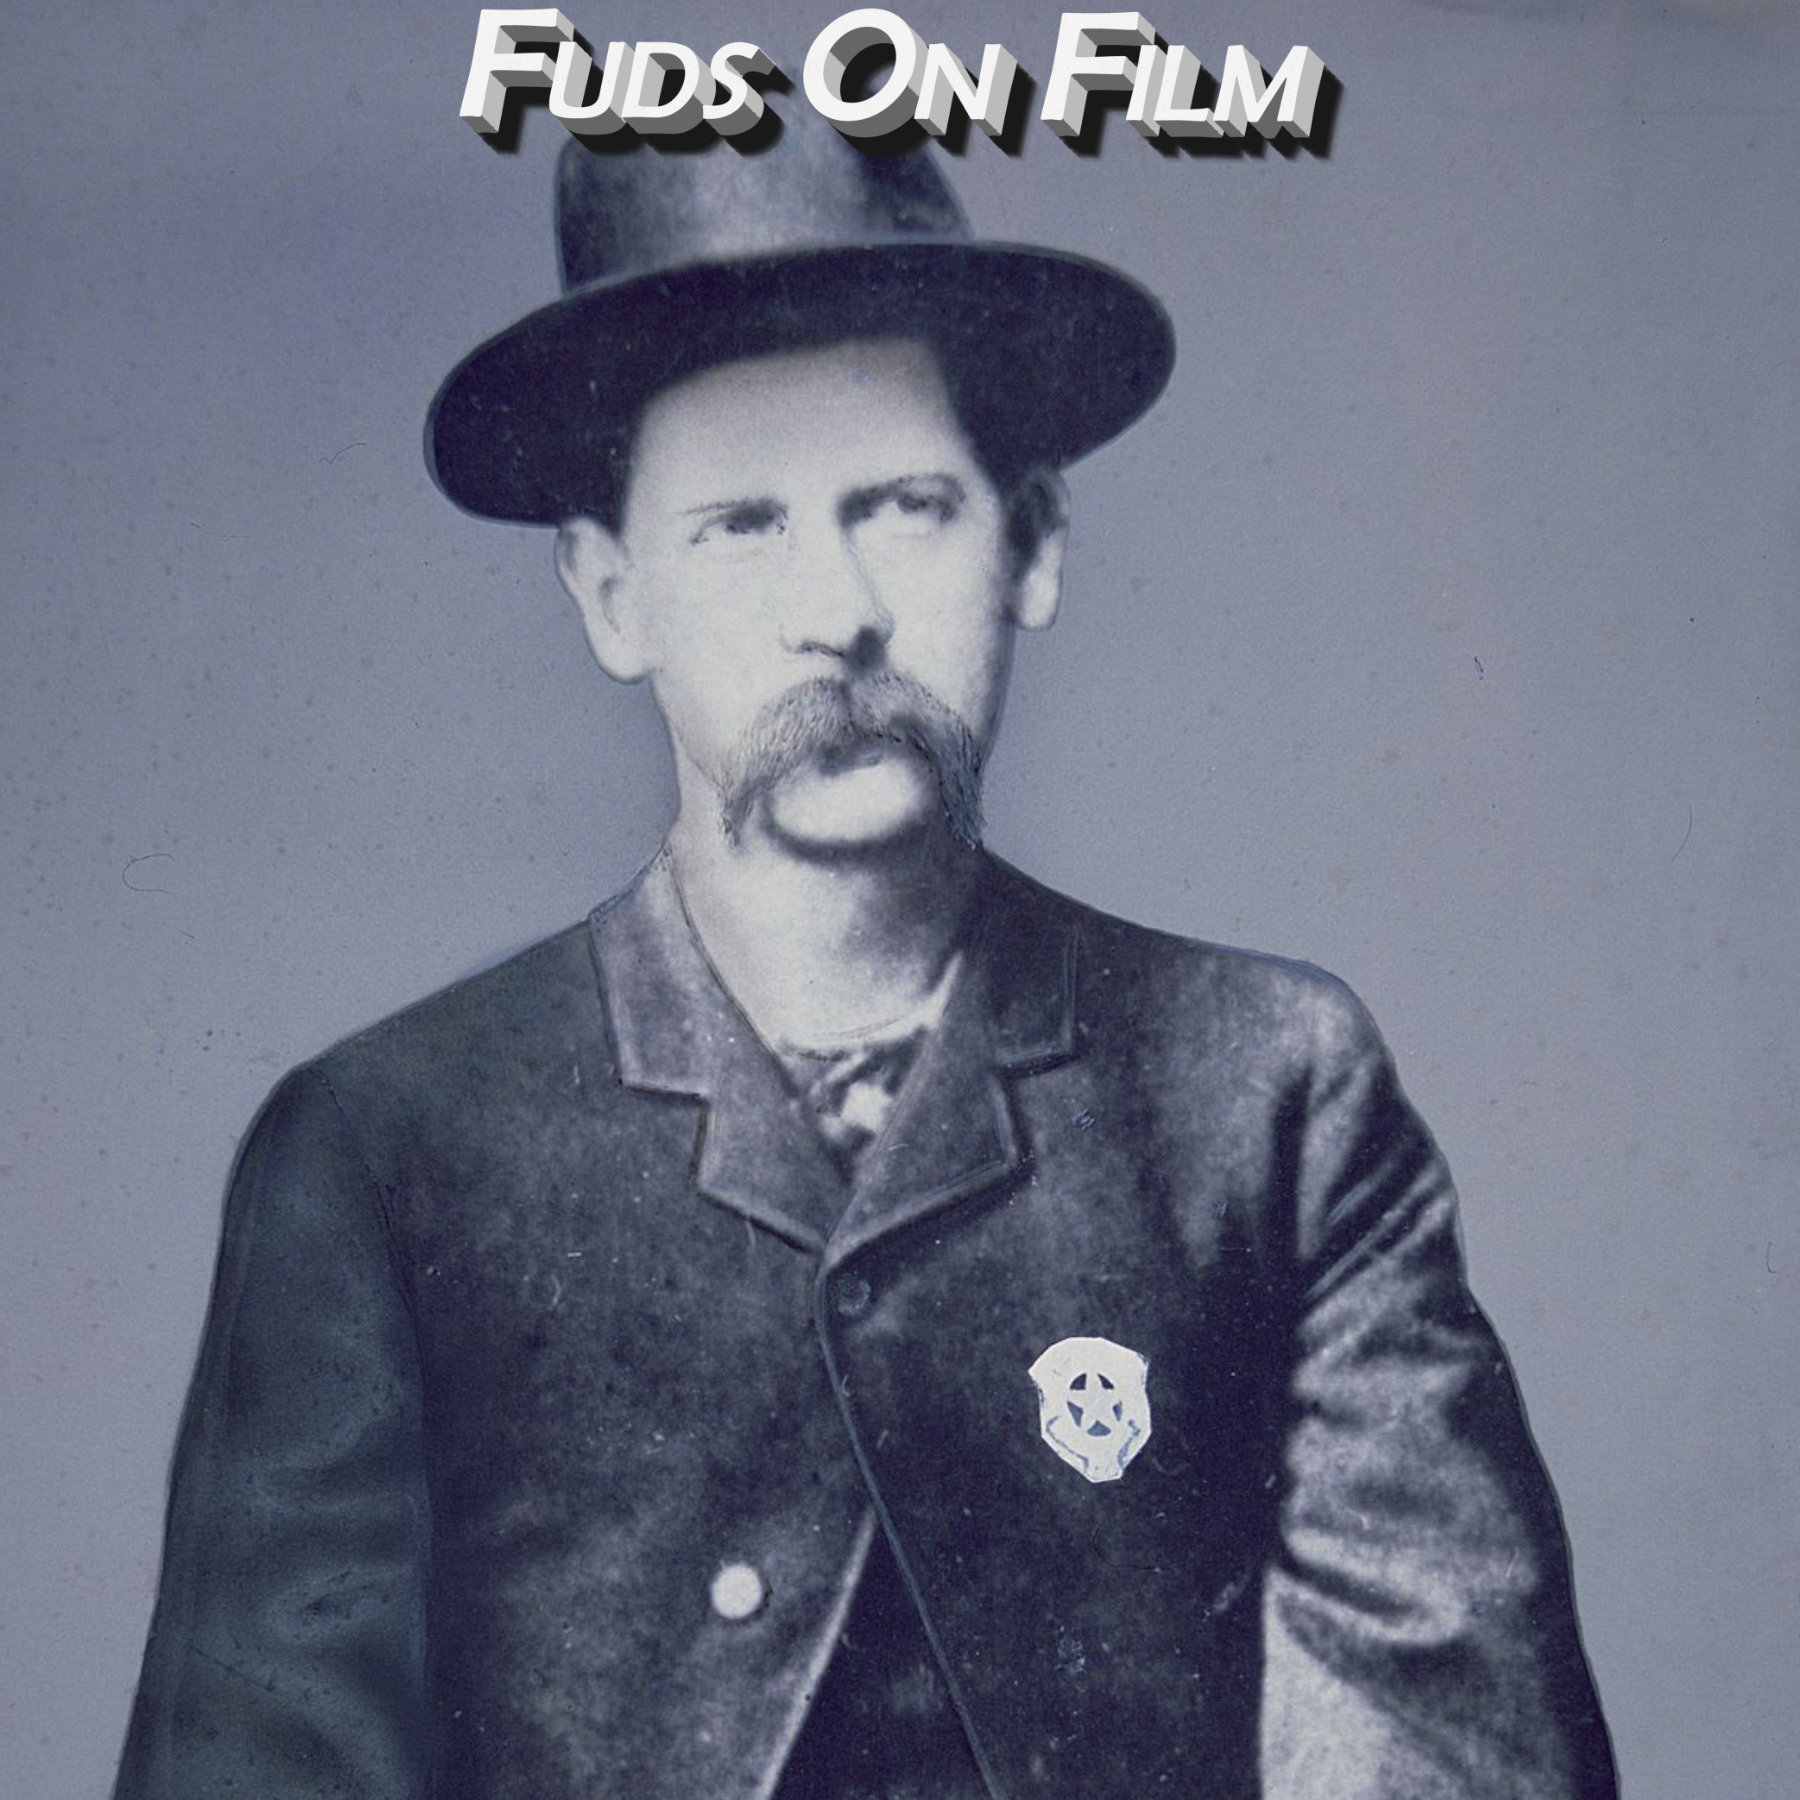 Tombstone and Wyatt Earp Fuds on Film